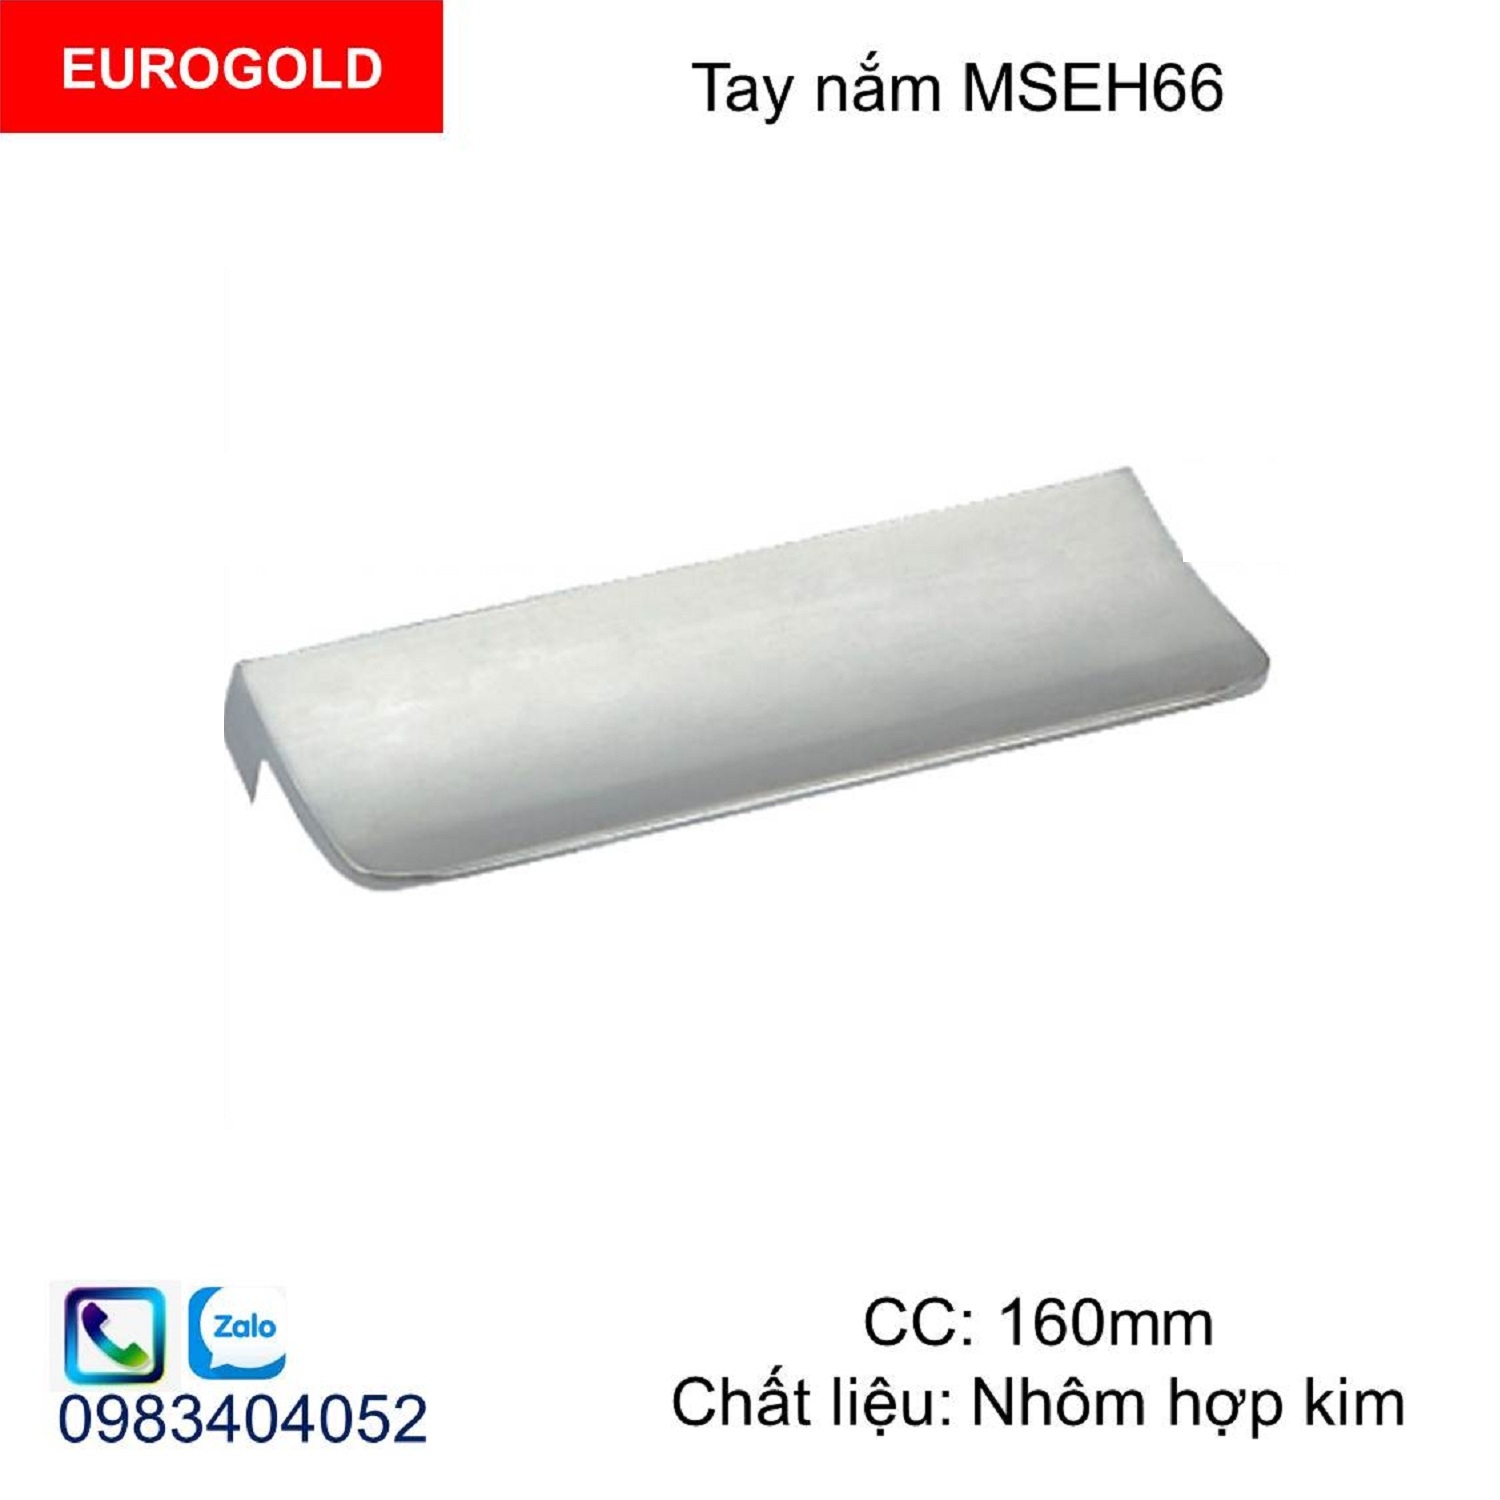 Tay nắm Eurogold MSEH66-160